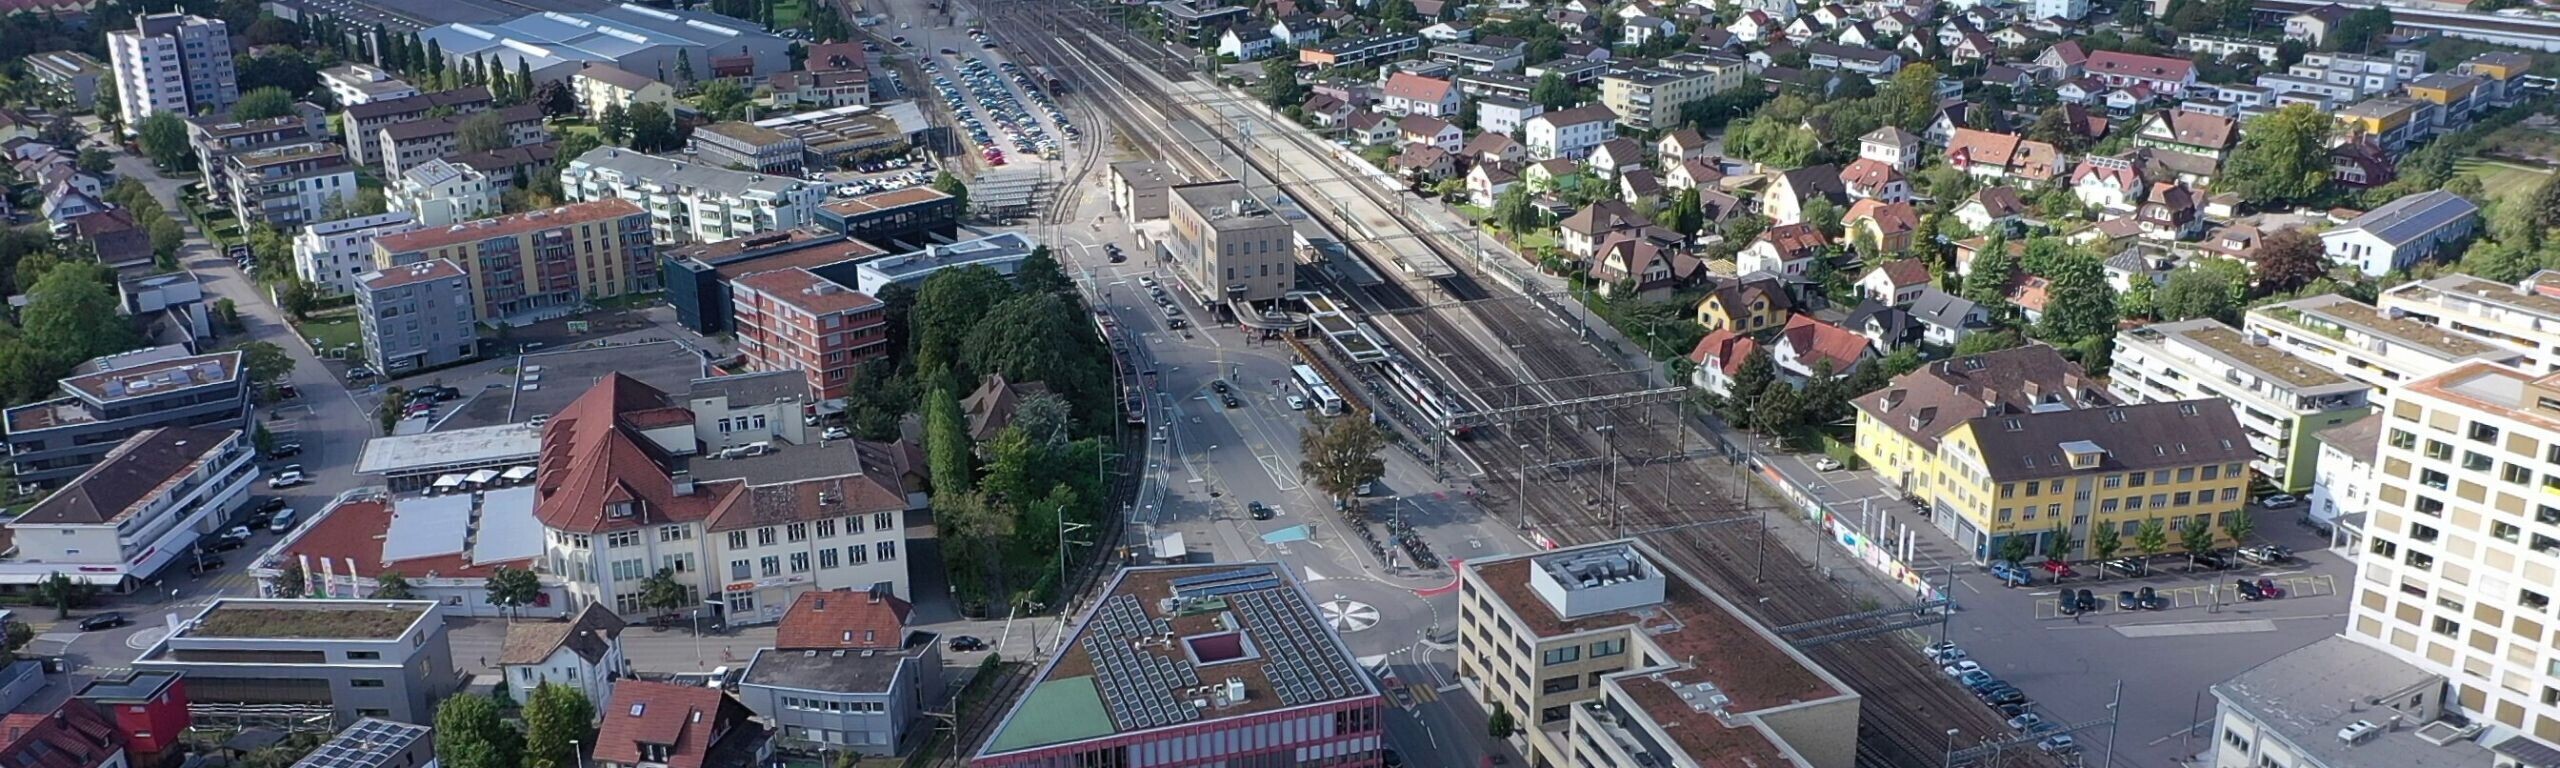 Luftaufnahme des Bahnhof Lenzburg